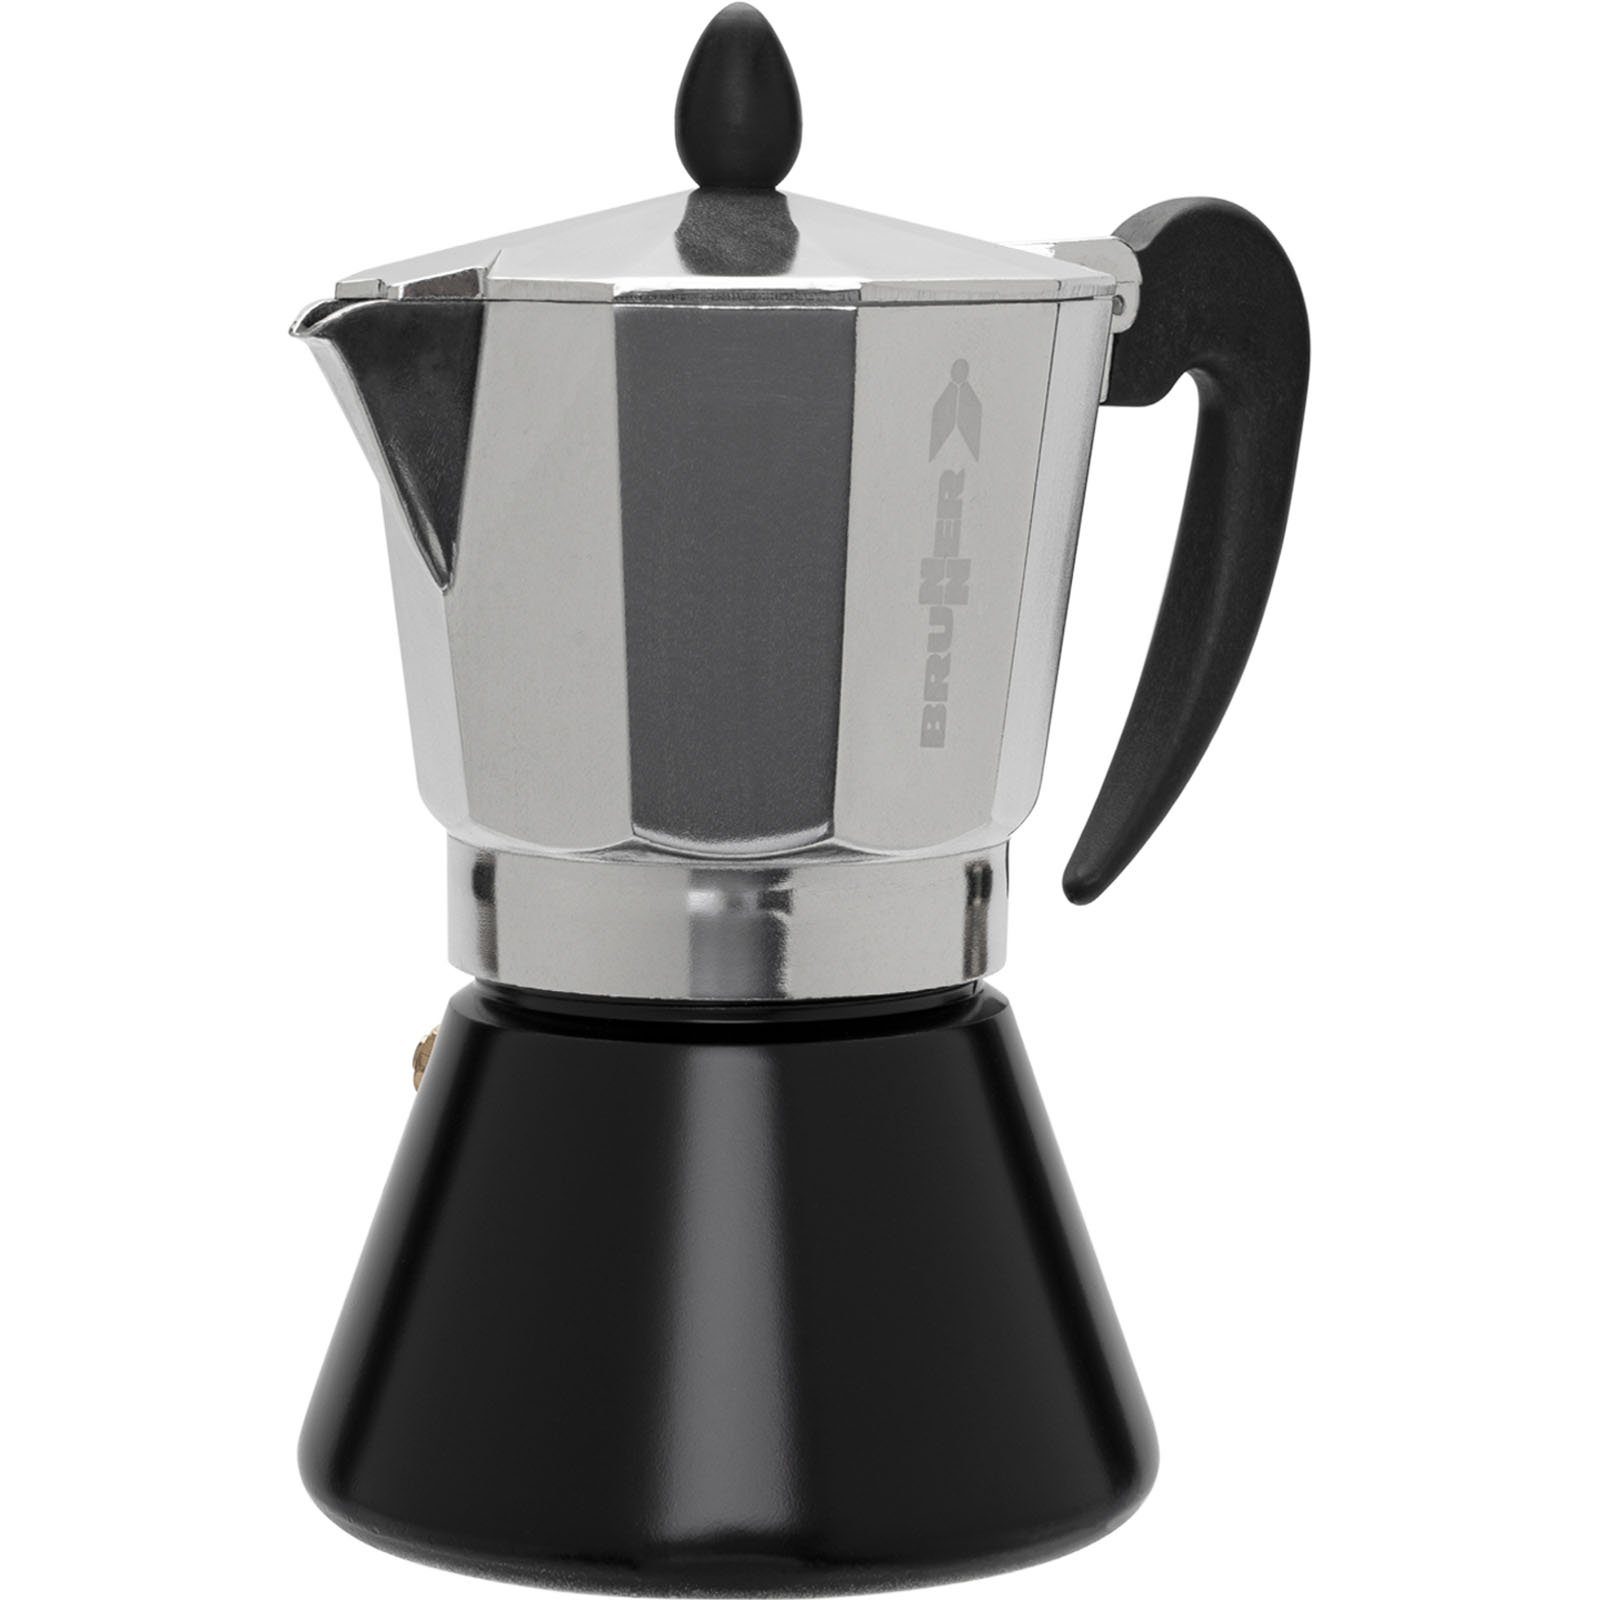 Mc BRUNNER Moka, Permanentfilter Percolator Kanne Induktion Espresso Kocher Kaffee Aluminium/Stahl, Espressokocher